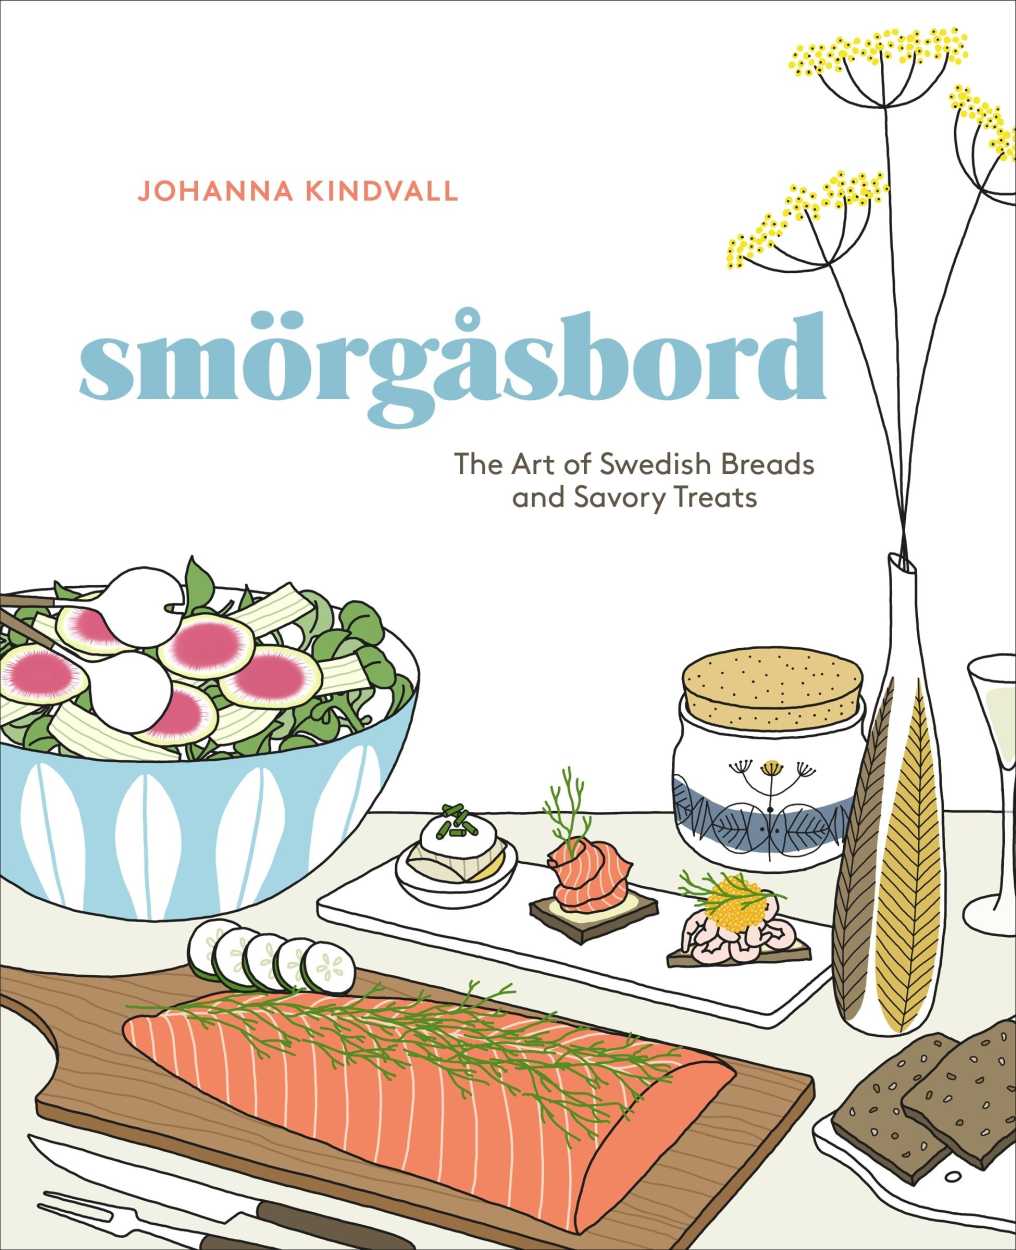 Cover for the book "Smorgasbord"